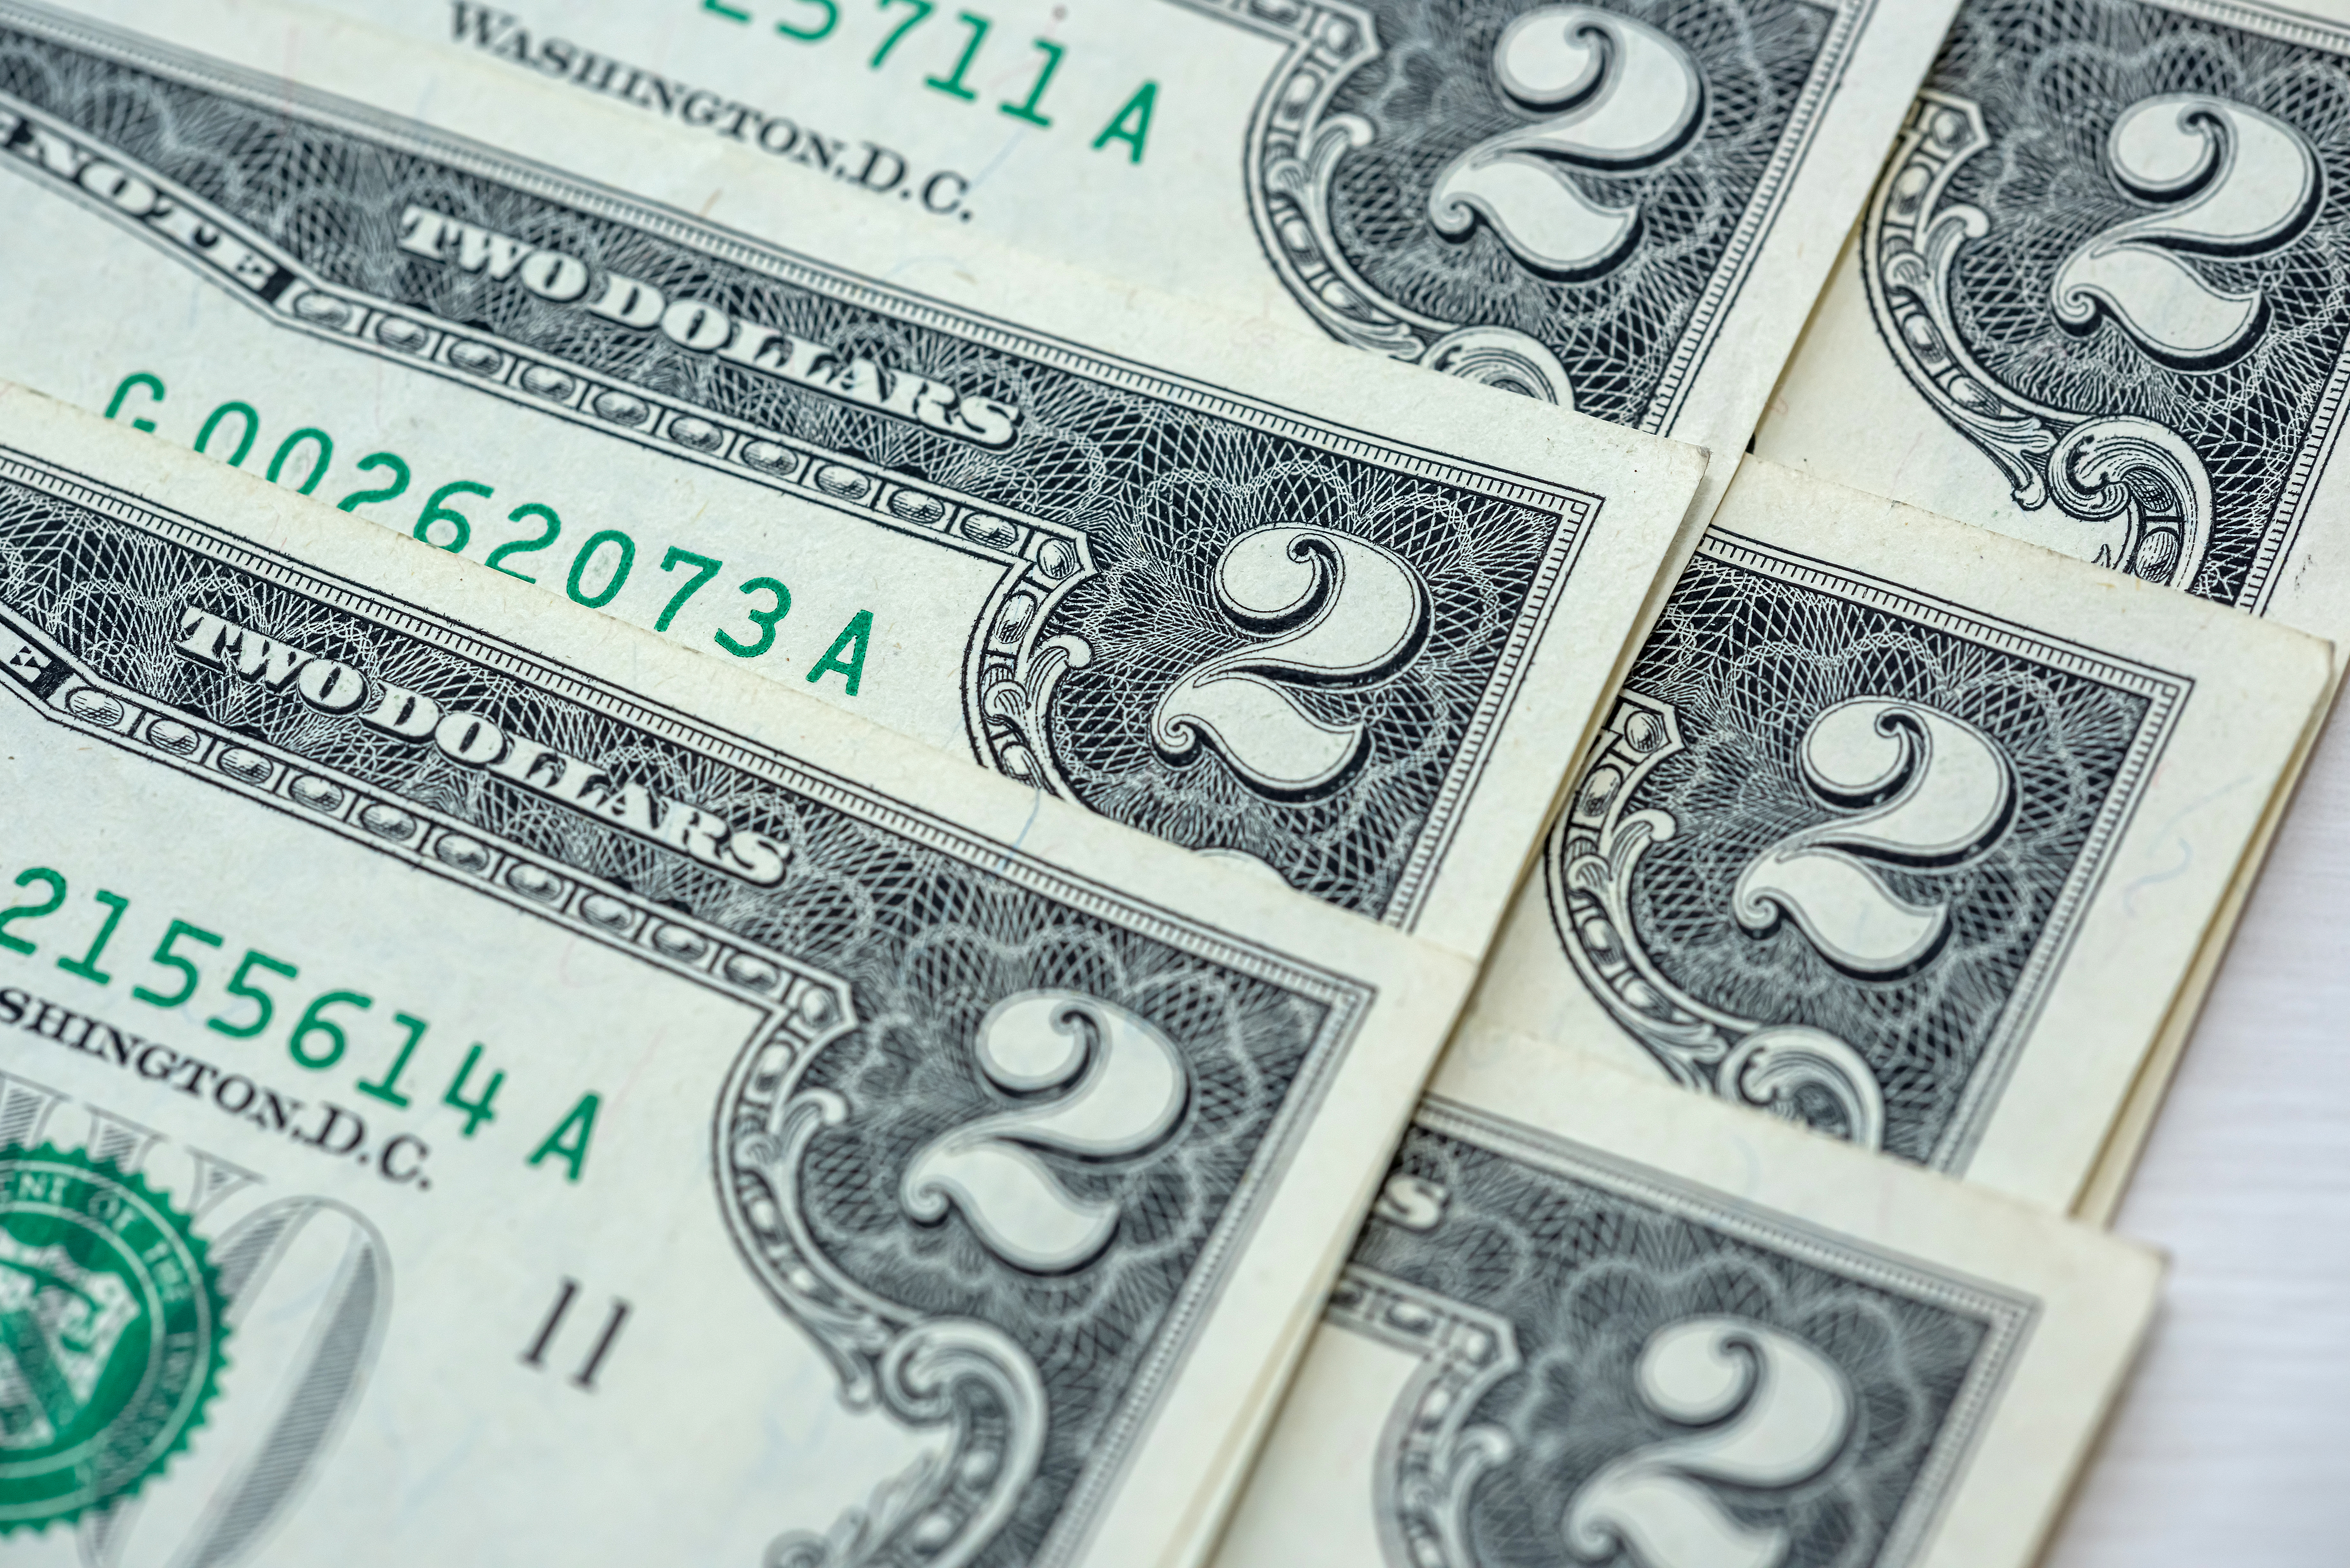 Rare $1,000 Bill Sells for Over $2 Million